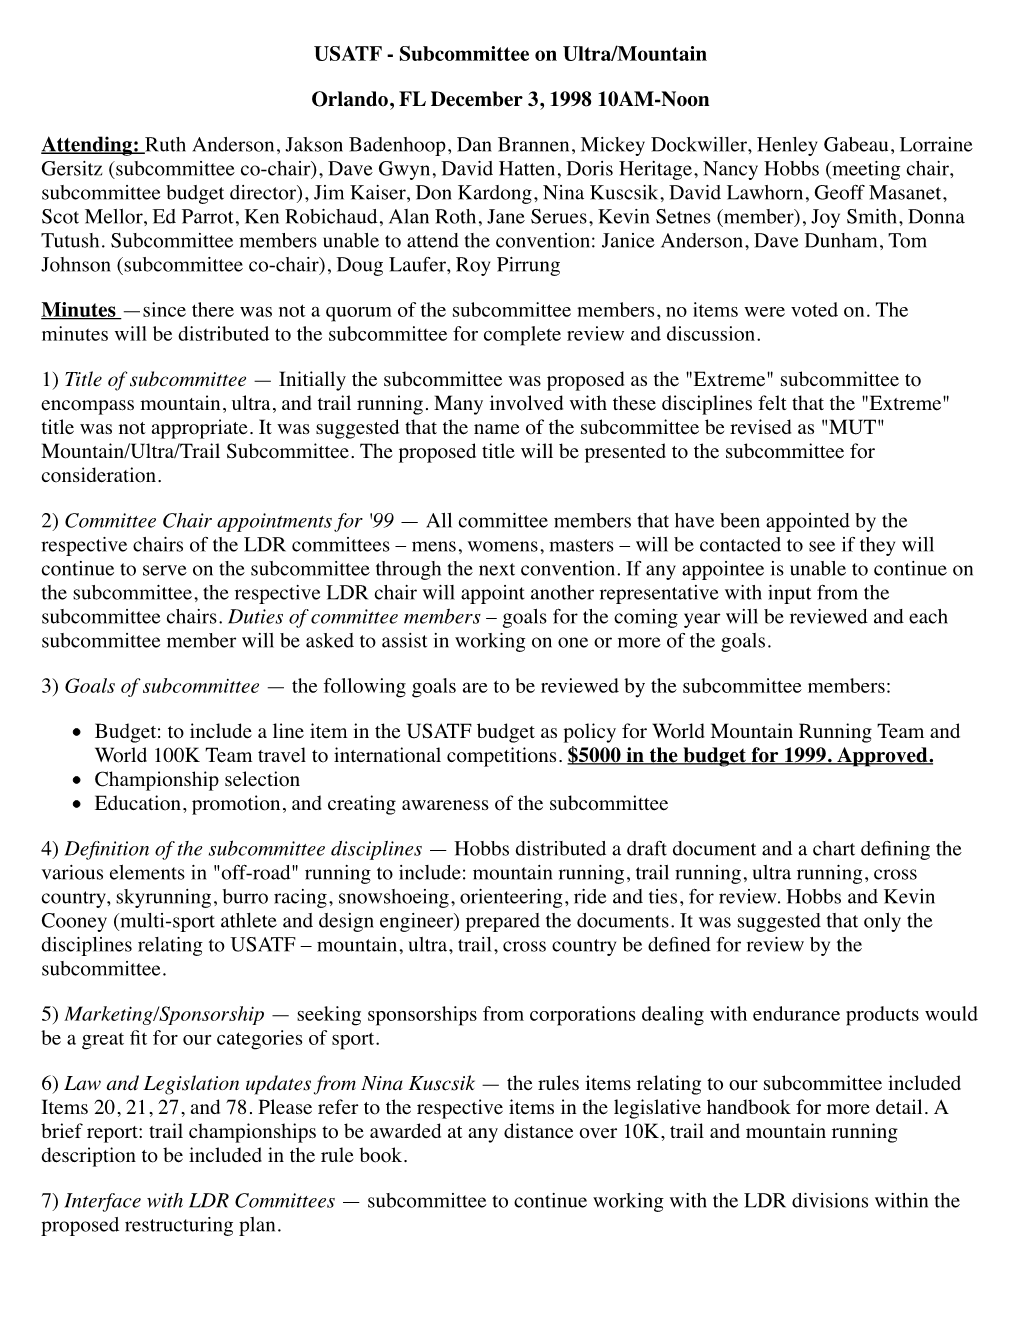 1998 USATF MUT Subcommittee Minutes